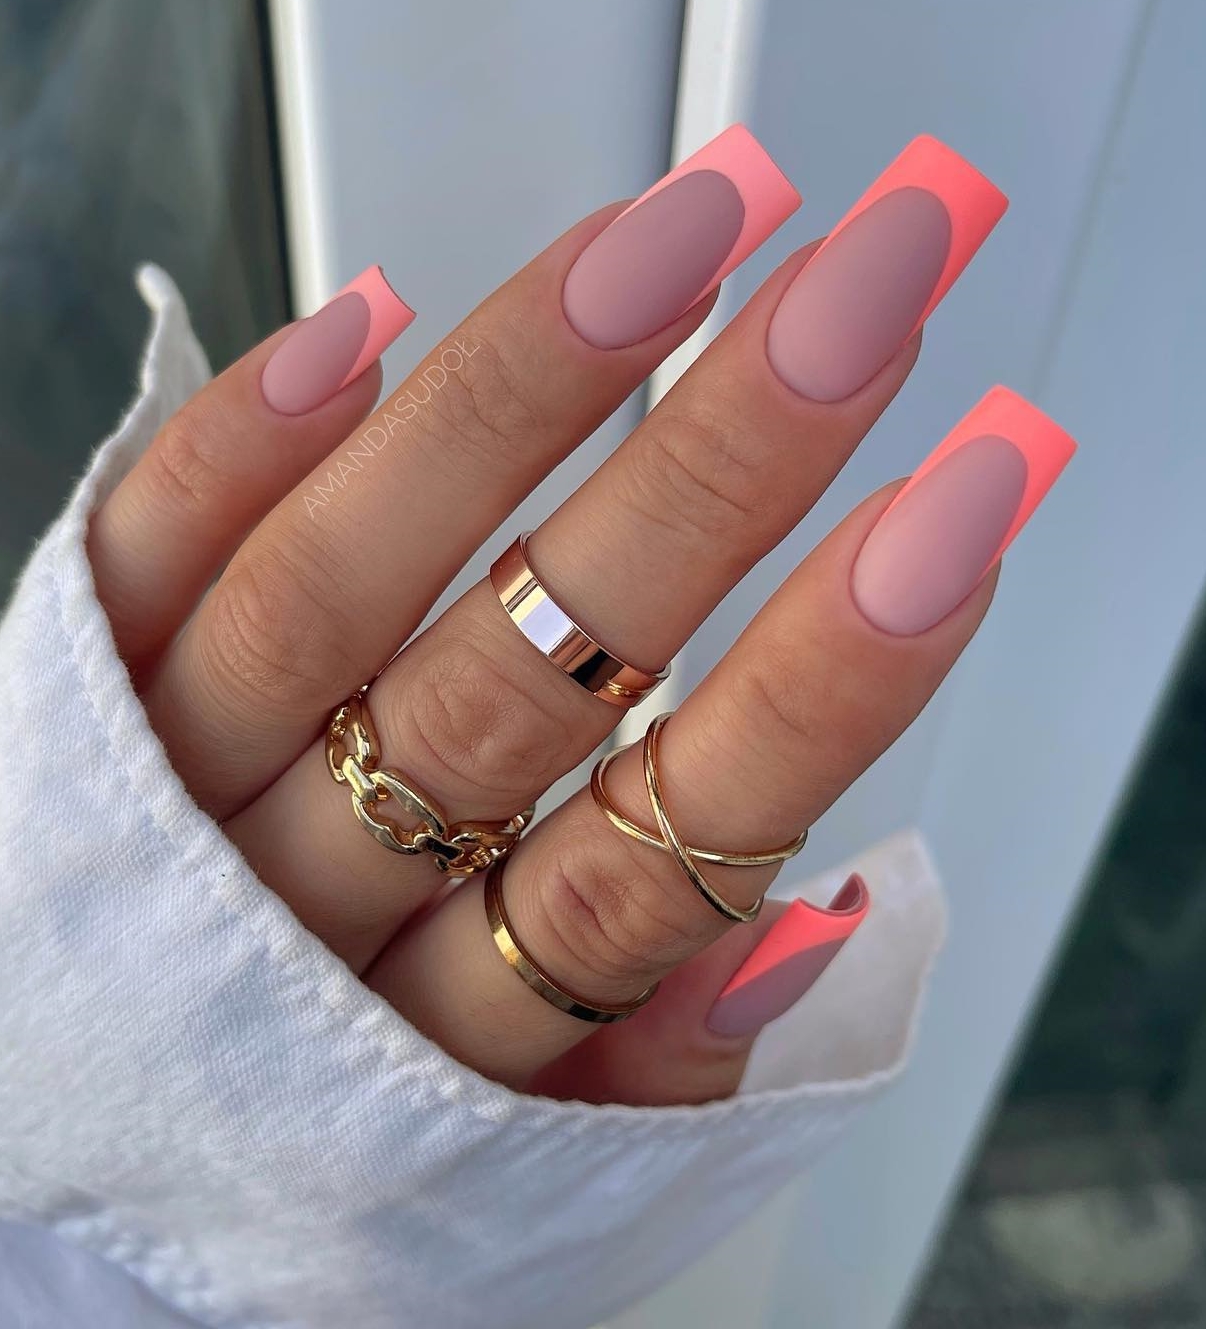 lange vierkante nagels met roze Franse tips